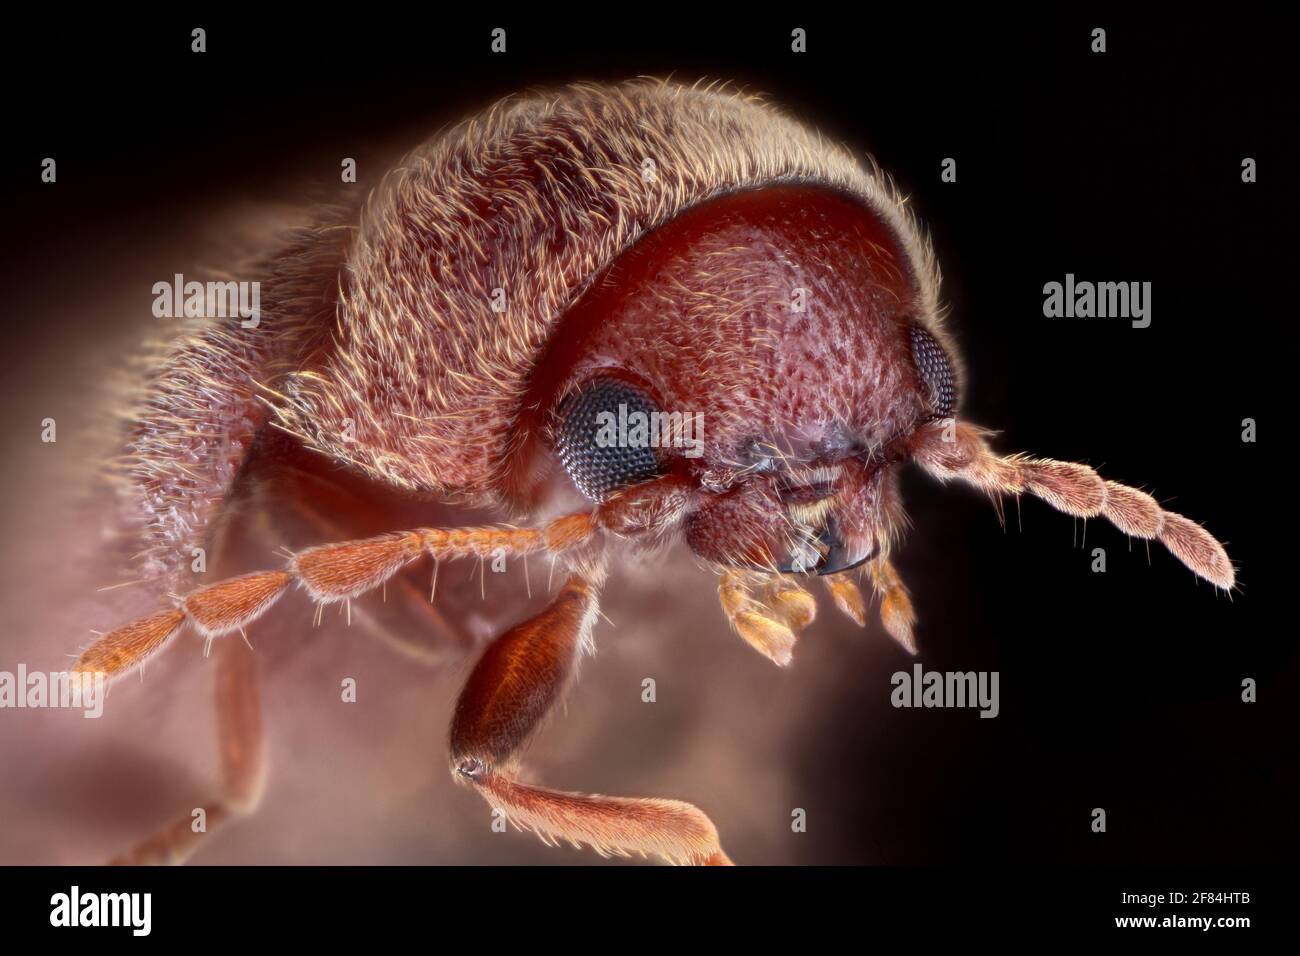 Drugstore beetle (Stegobium paniceum) in front of black background Stock Photo